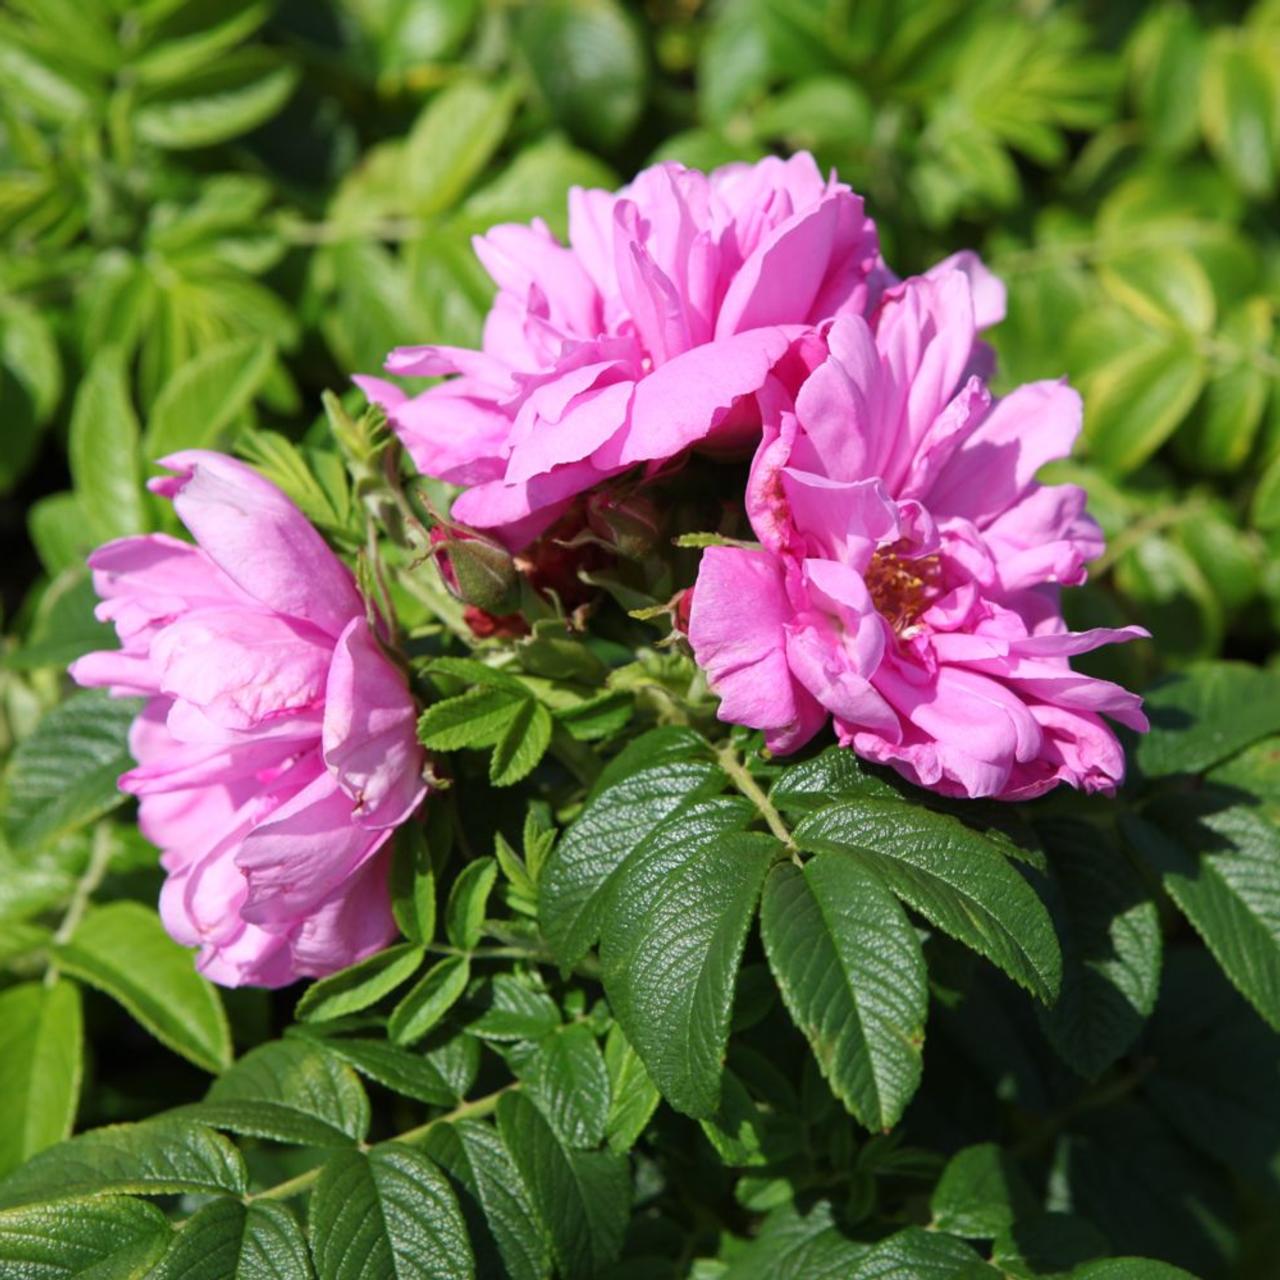 Rosa rugosa 'Admiration' plant